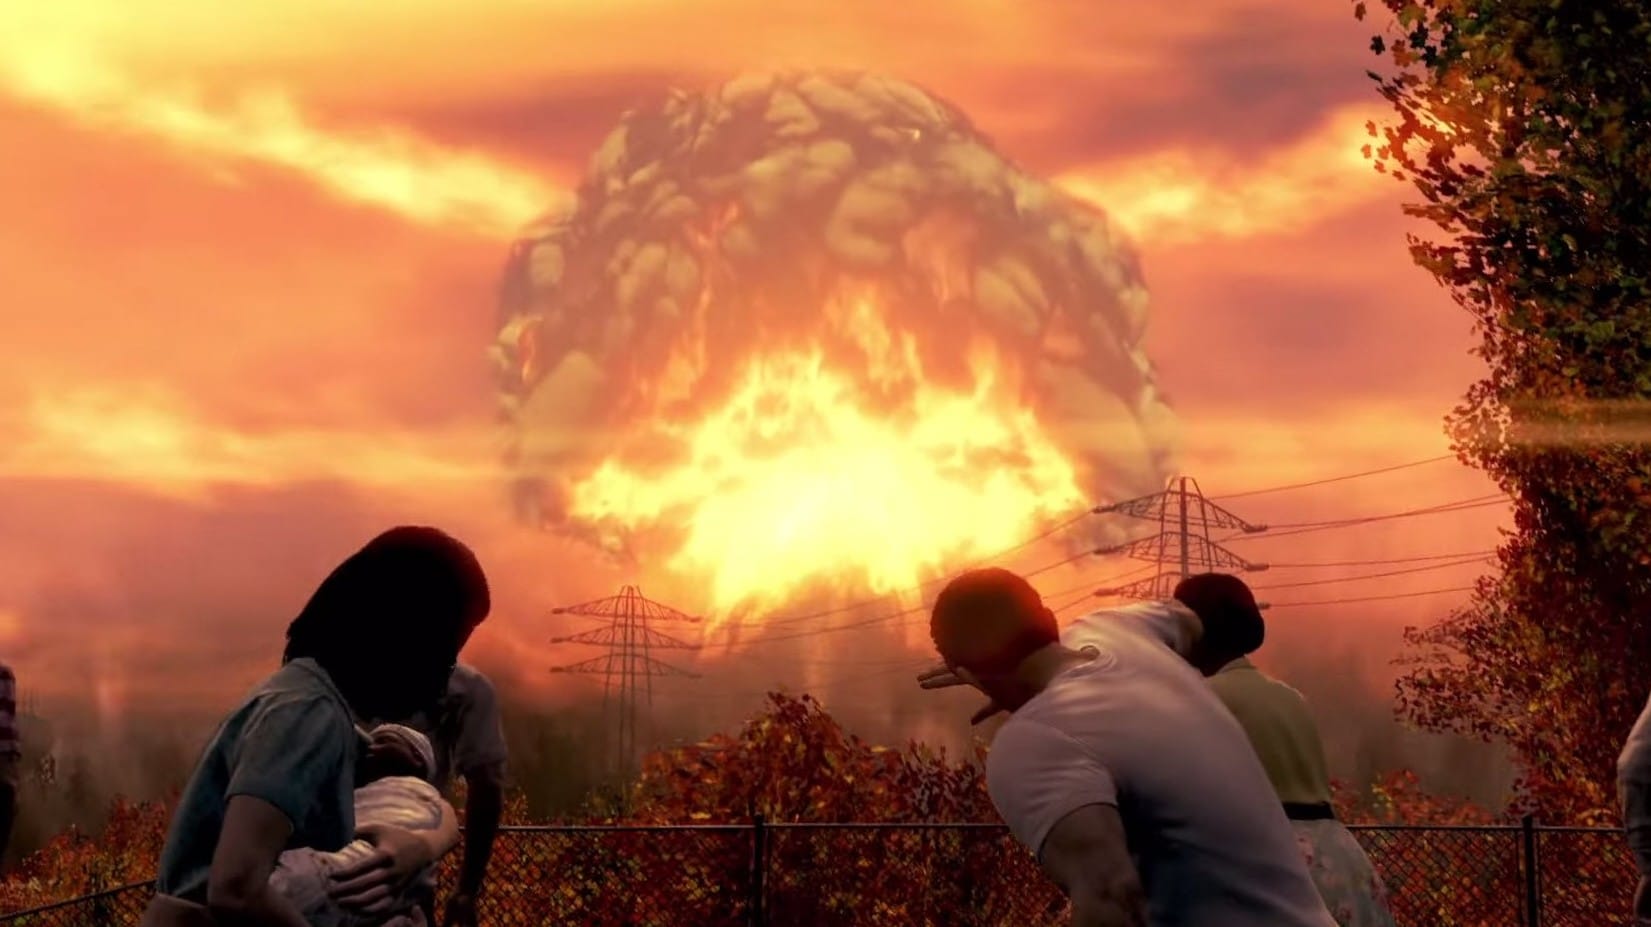 Games of Ages: videogiochi e guerra atomica